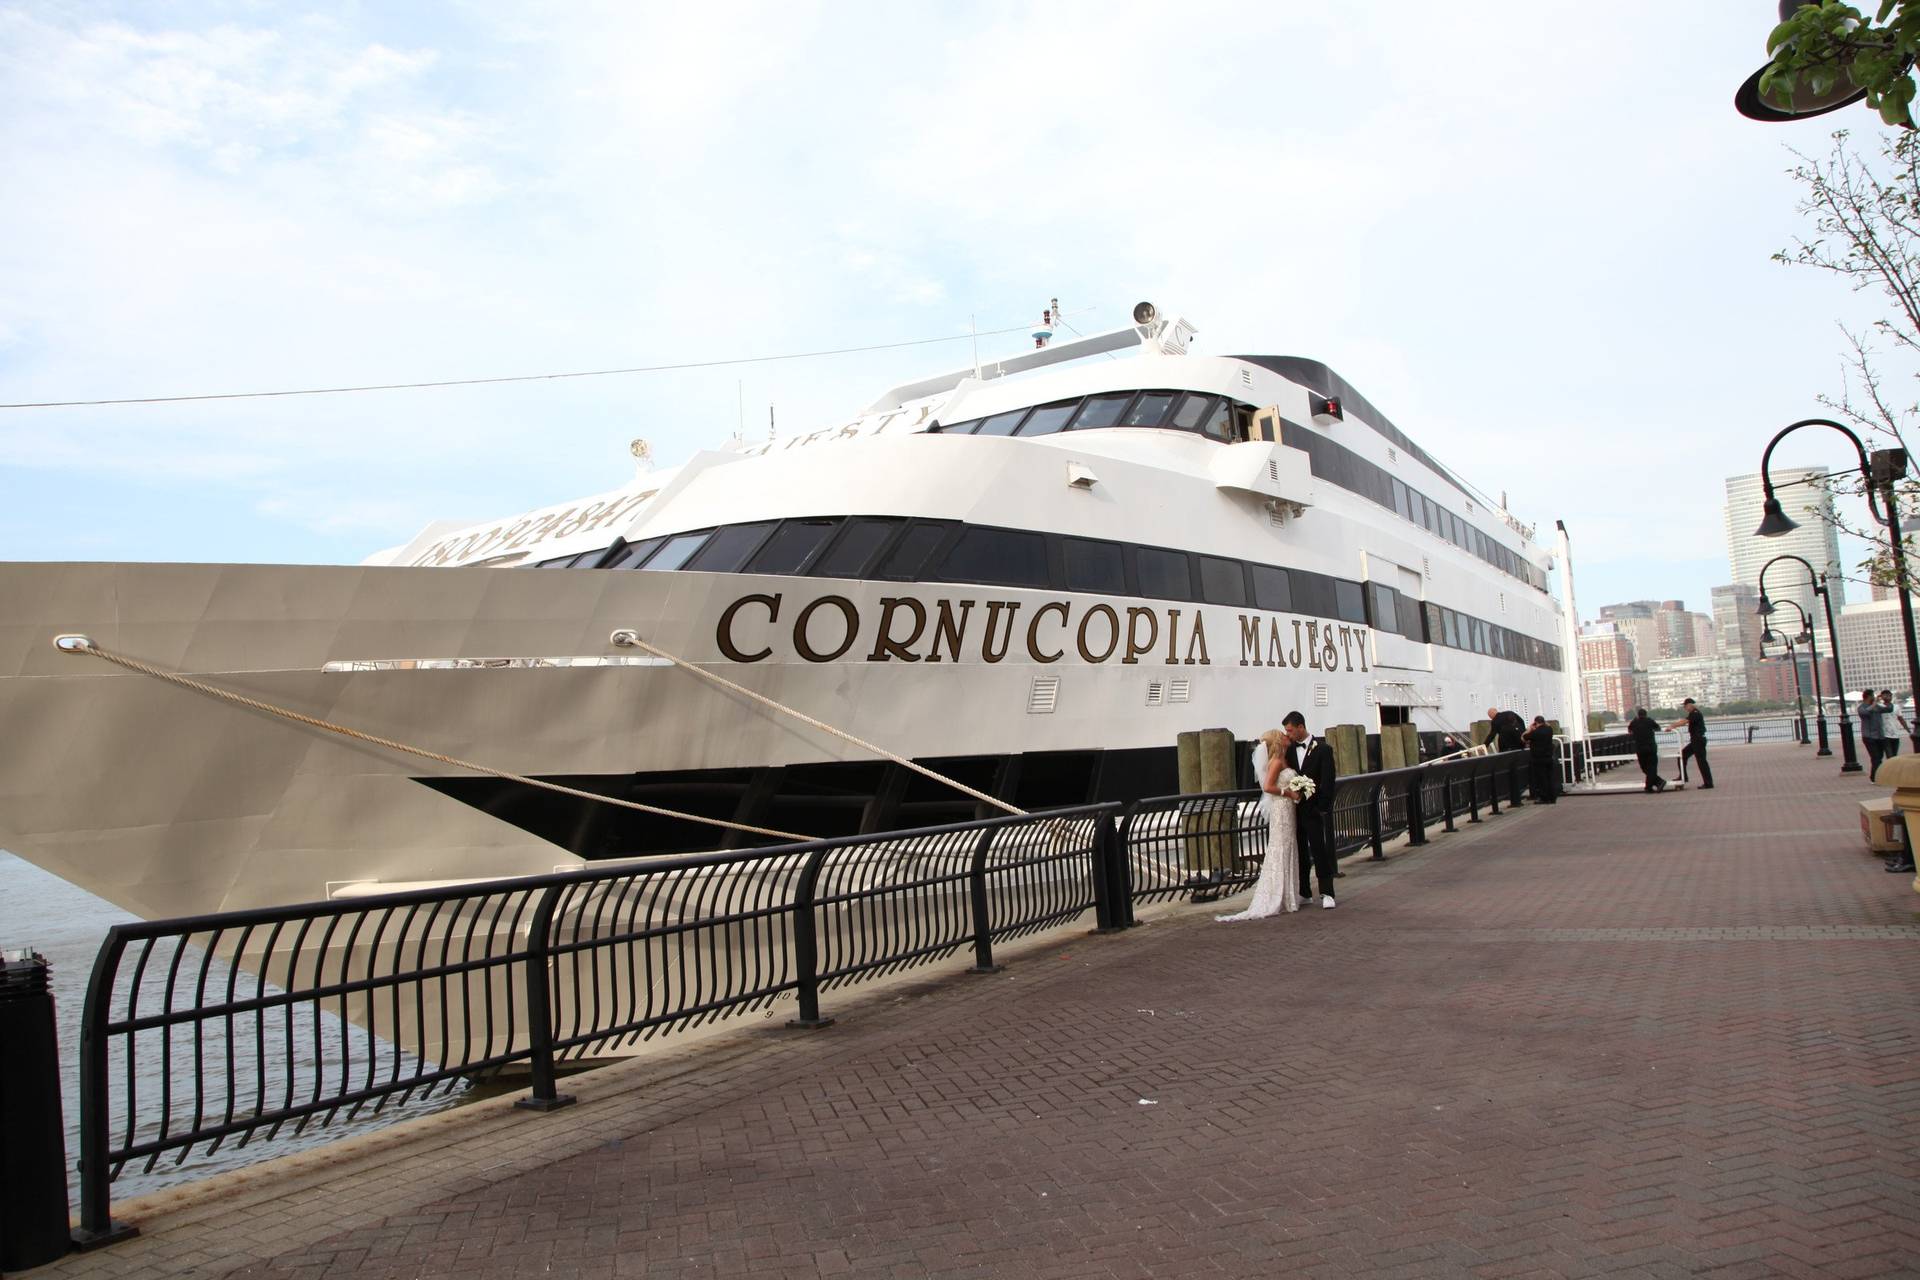 cornucopia cruise line in perth amboy nj